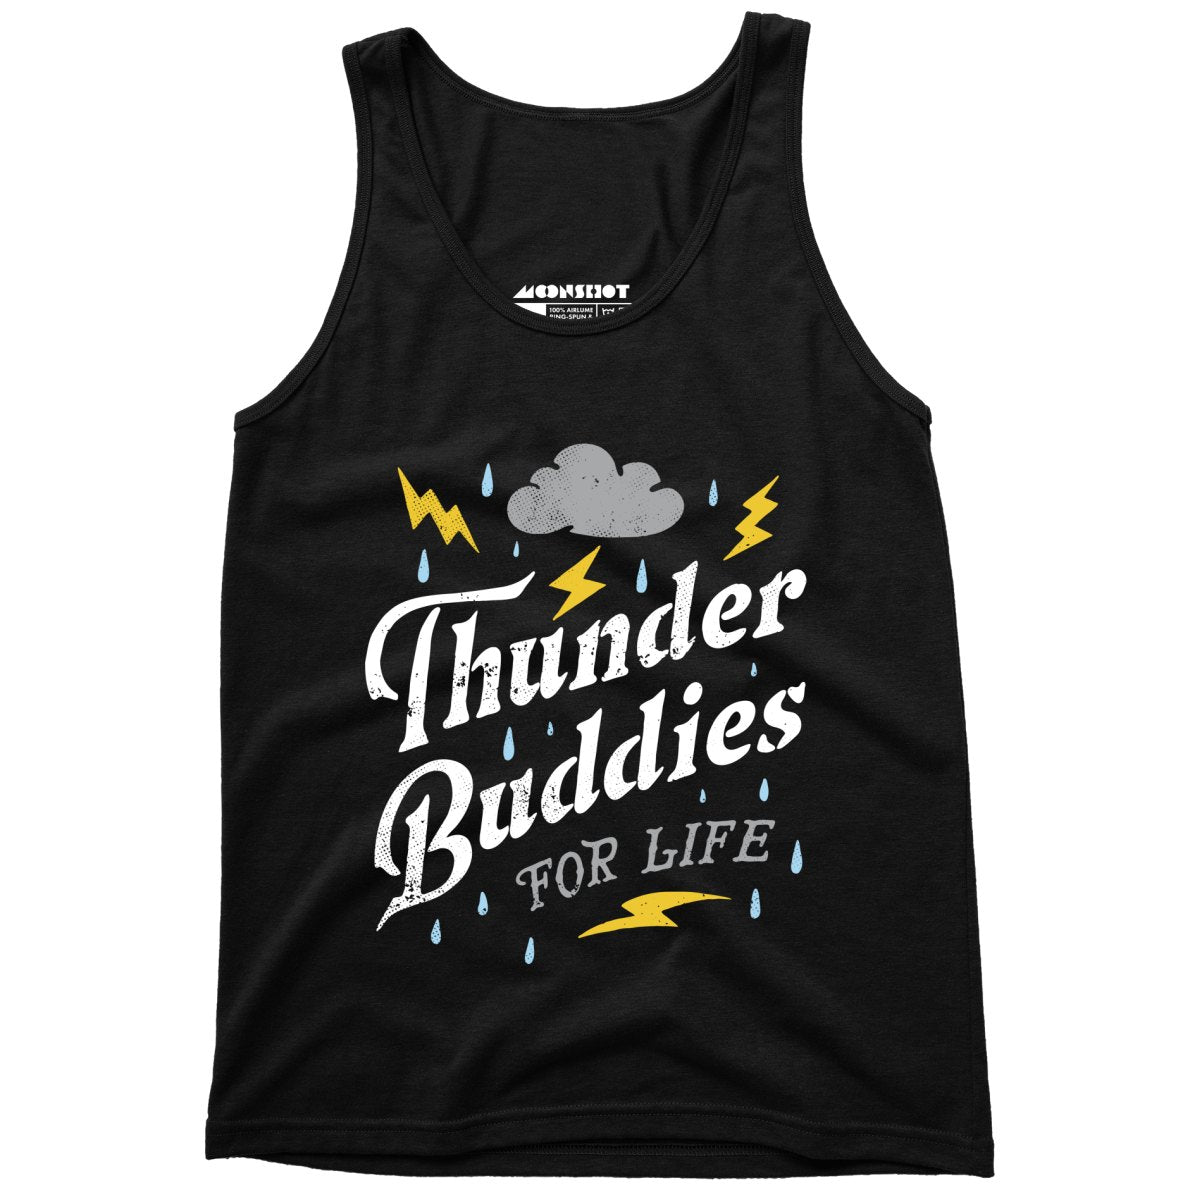 Thunder Buddies for Life - Unisex Tank Top